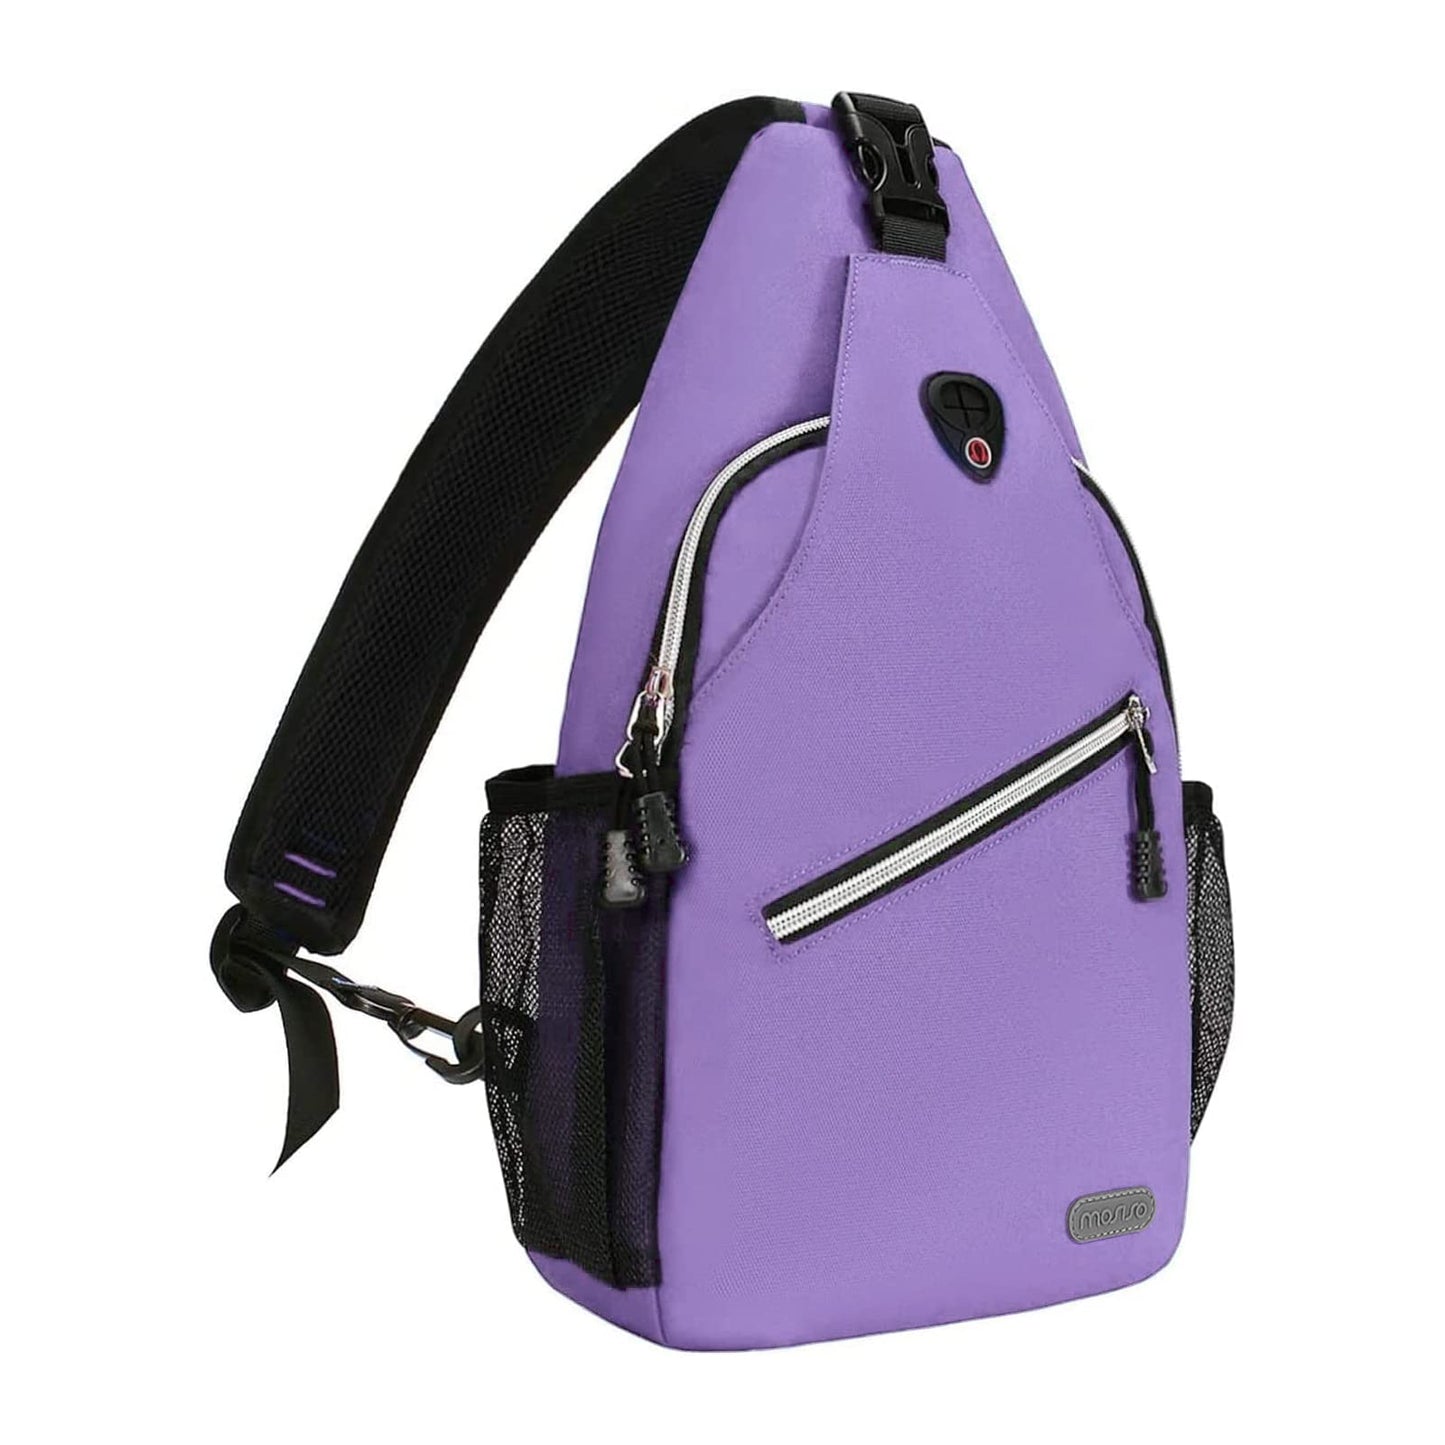 MOSISO Mini Sling Backpack,Small Hiking Daypack Travel Ou